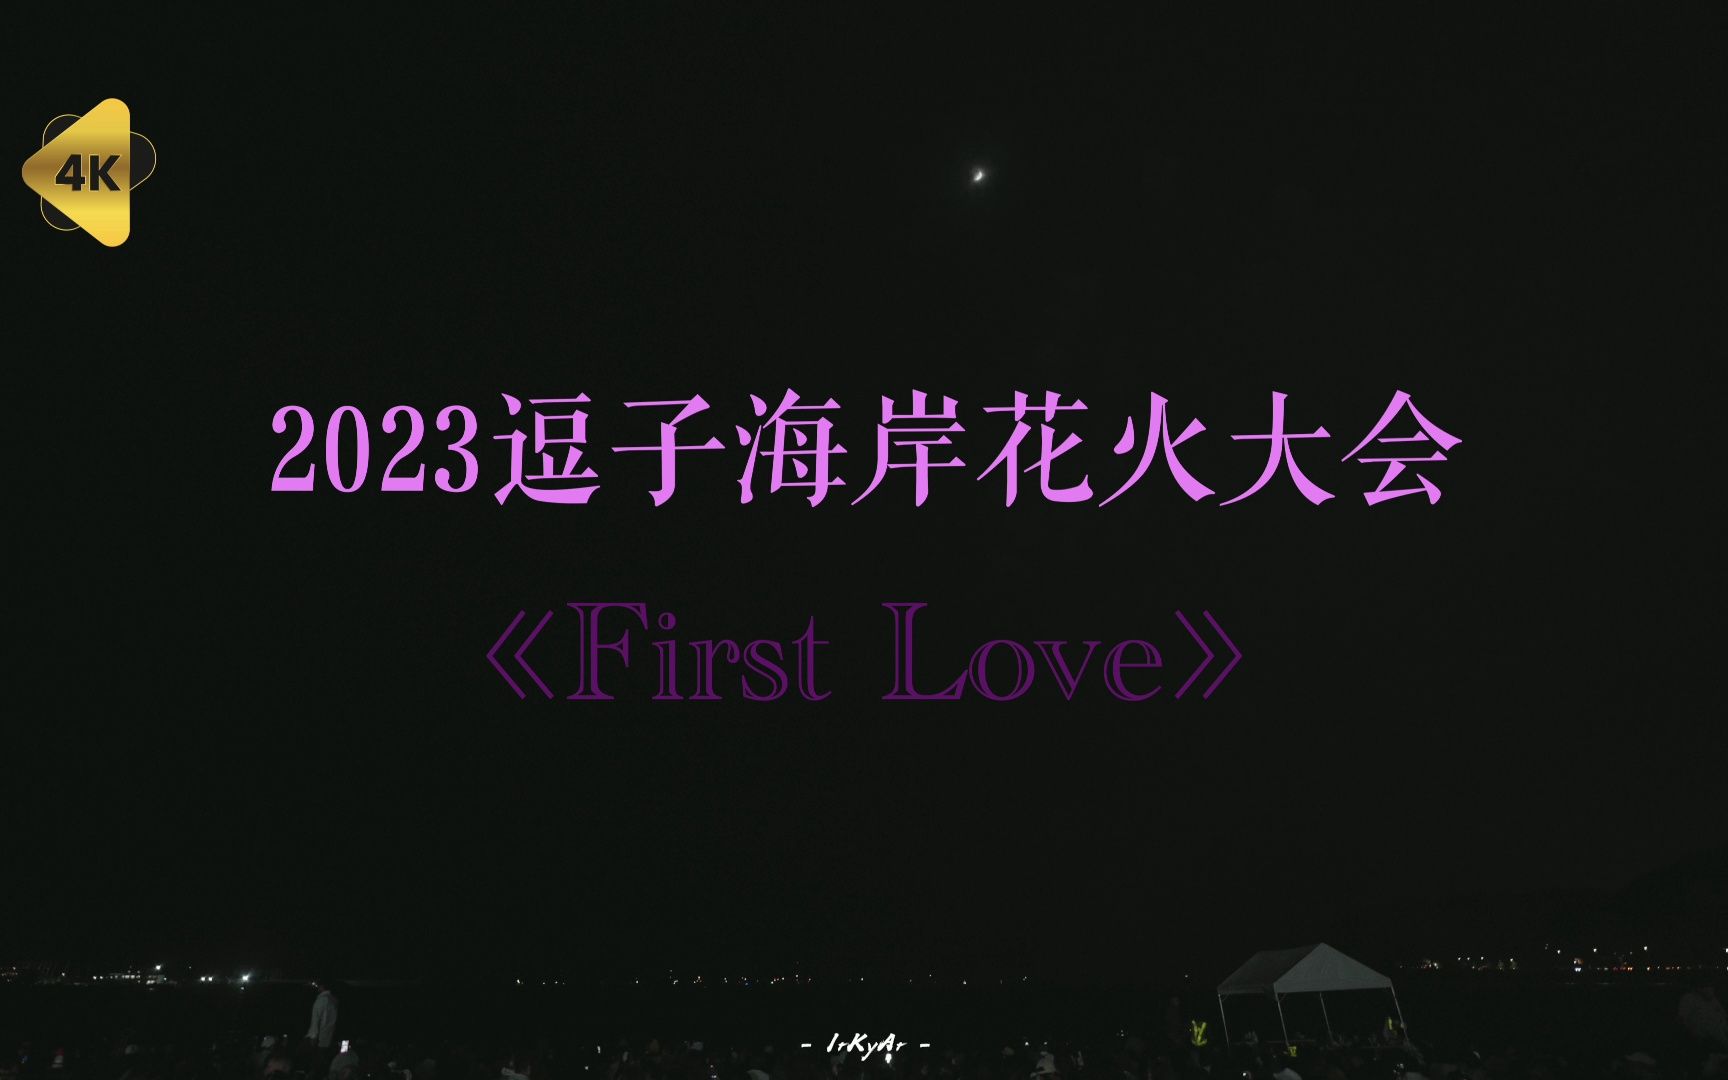 【4k】当《First Love》在花火大会上响起 ｜2023年逗子海岸花火大会｜irkyar